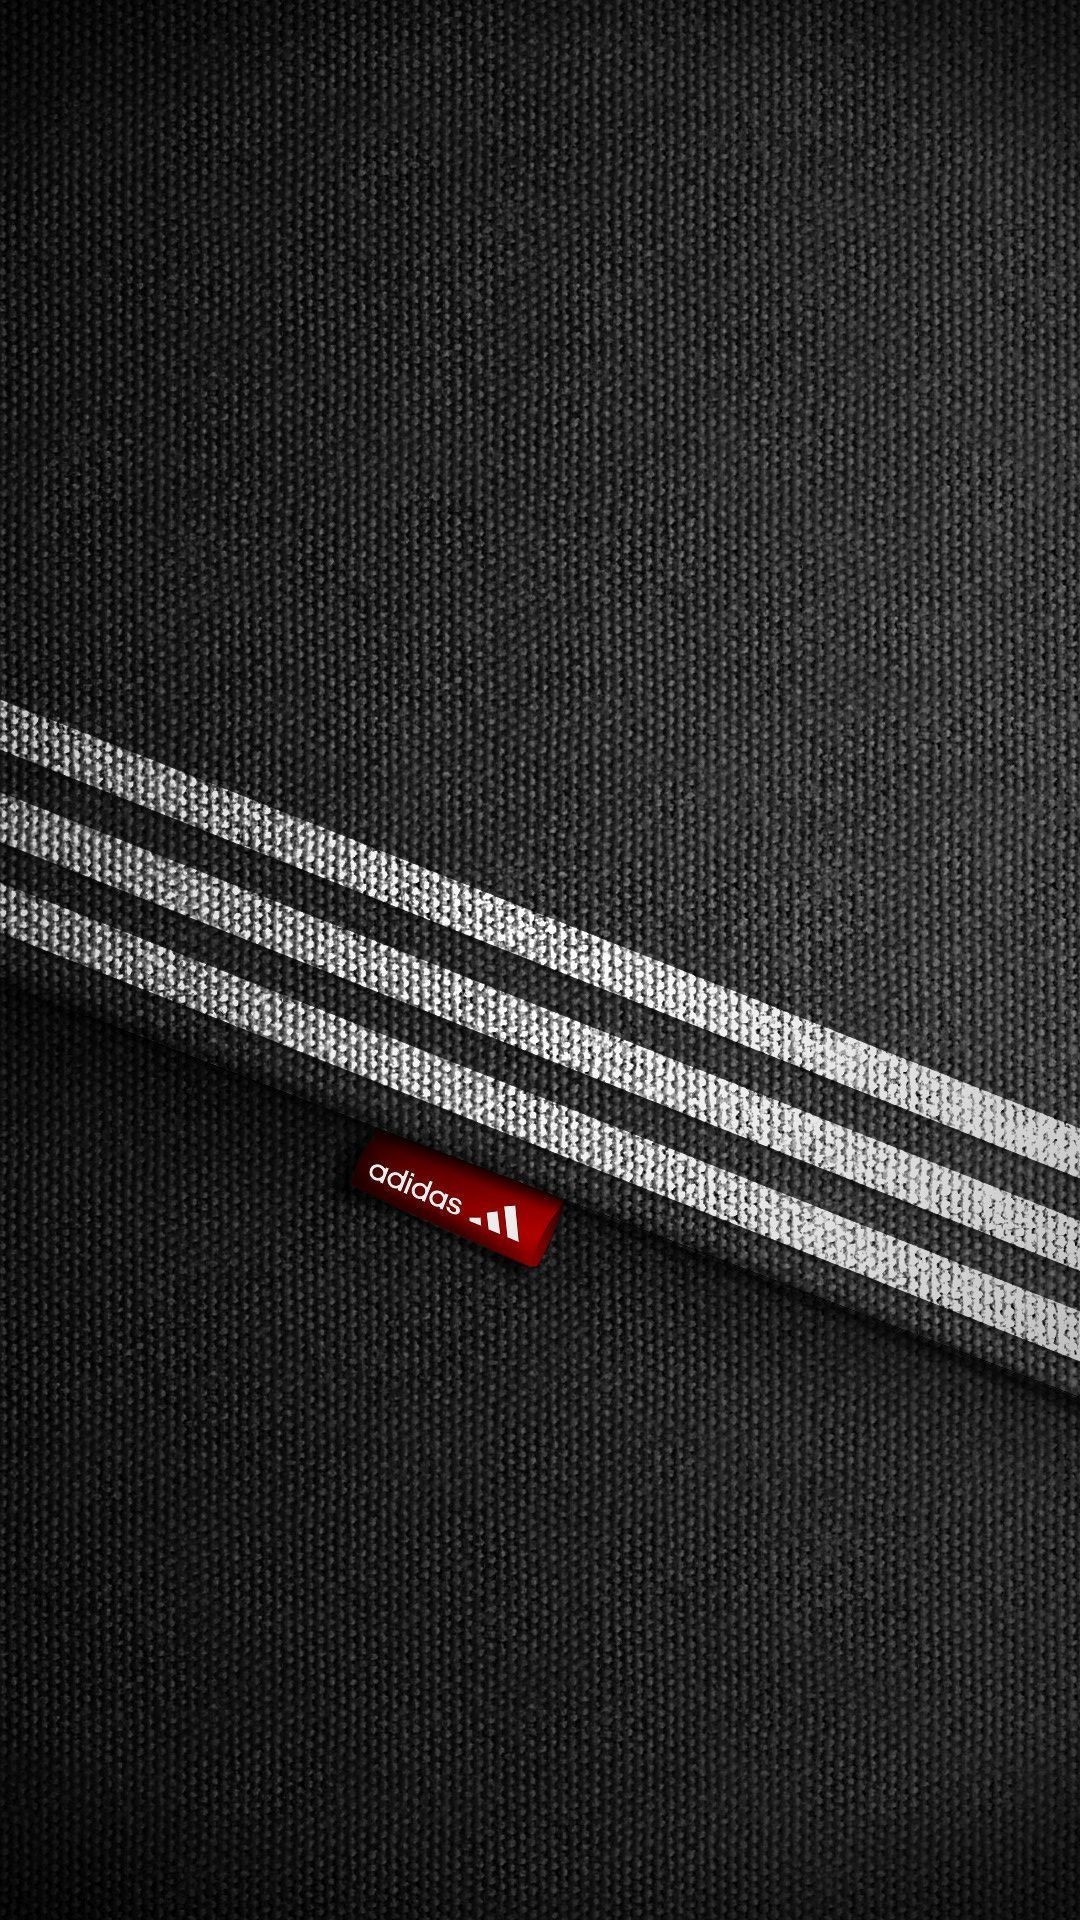 Adidas Iphone X Wallpaper Off 57 Www Otuzaltinciparalel Com